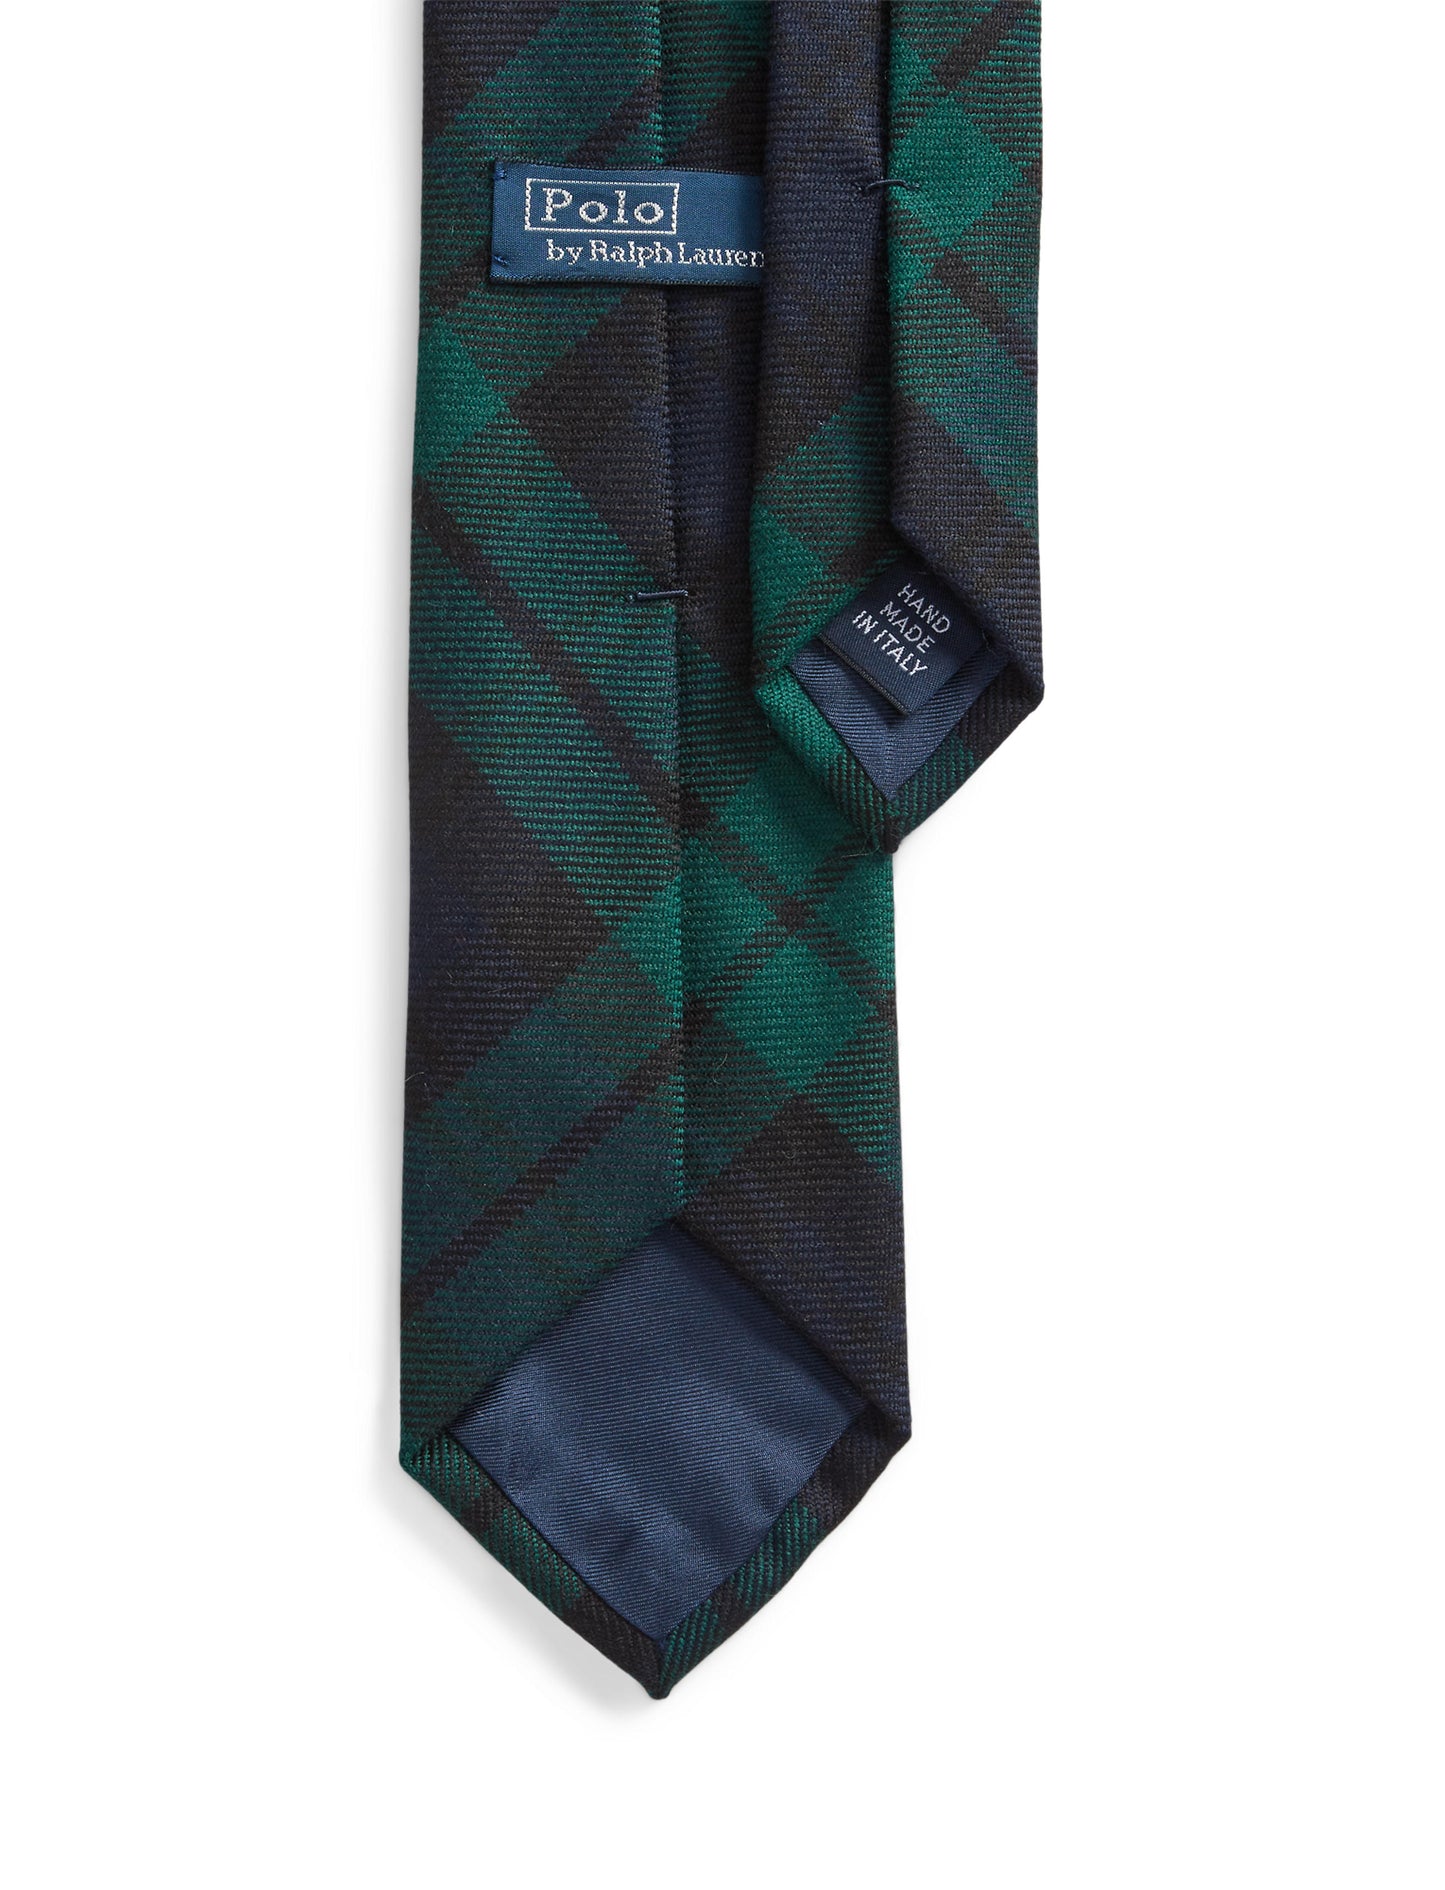 Polo Ralph Lauren Scottish Tartan Tie Navy/Green